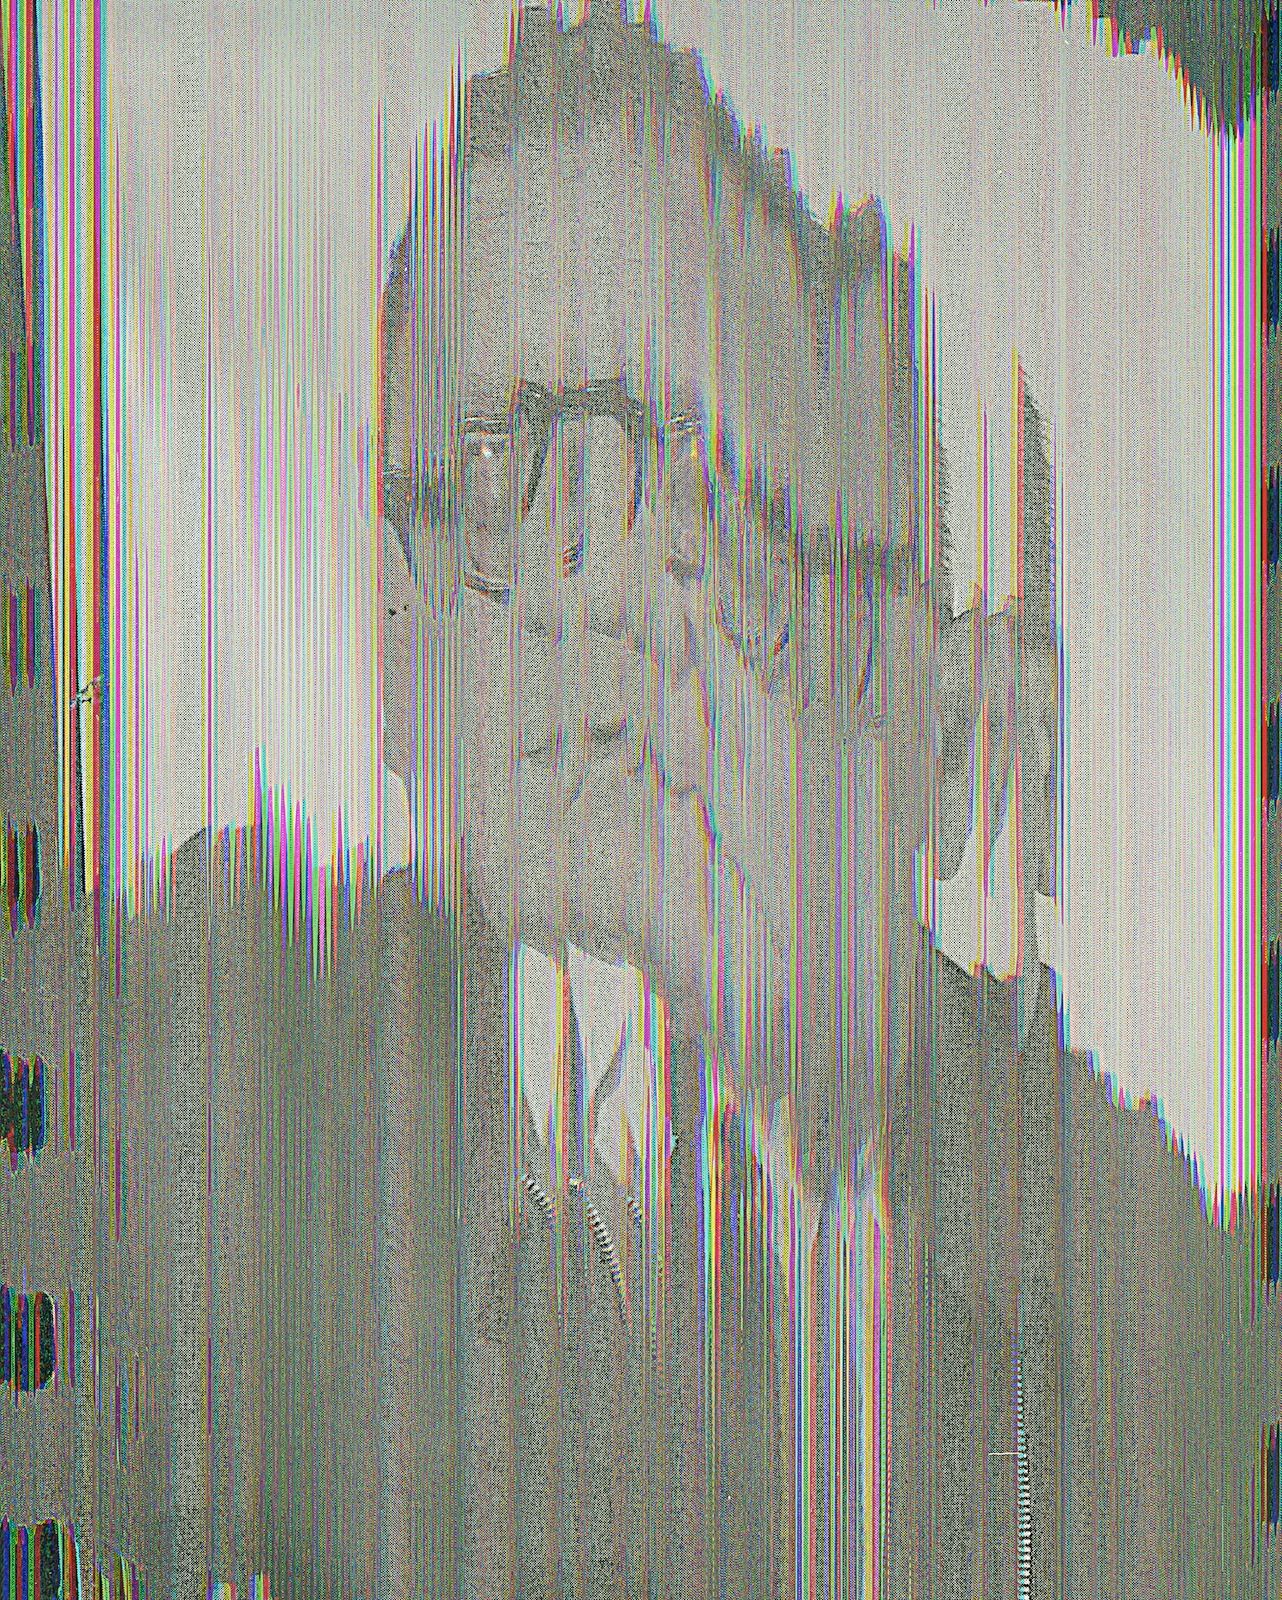 Sara Cwynar, Man From Contact Sheet (Darkroom Manuals), 2013, chromogenic print mounted on plexiglas, framed, 30 × 24 in.